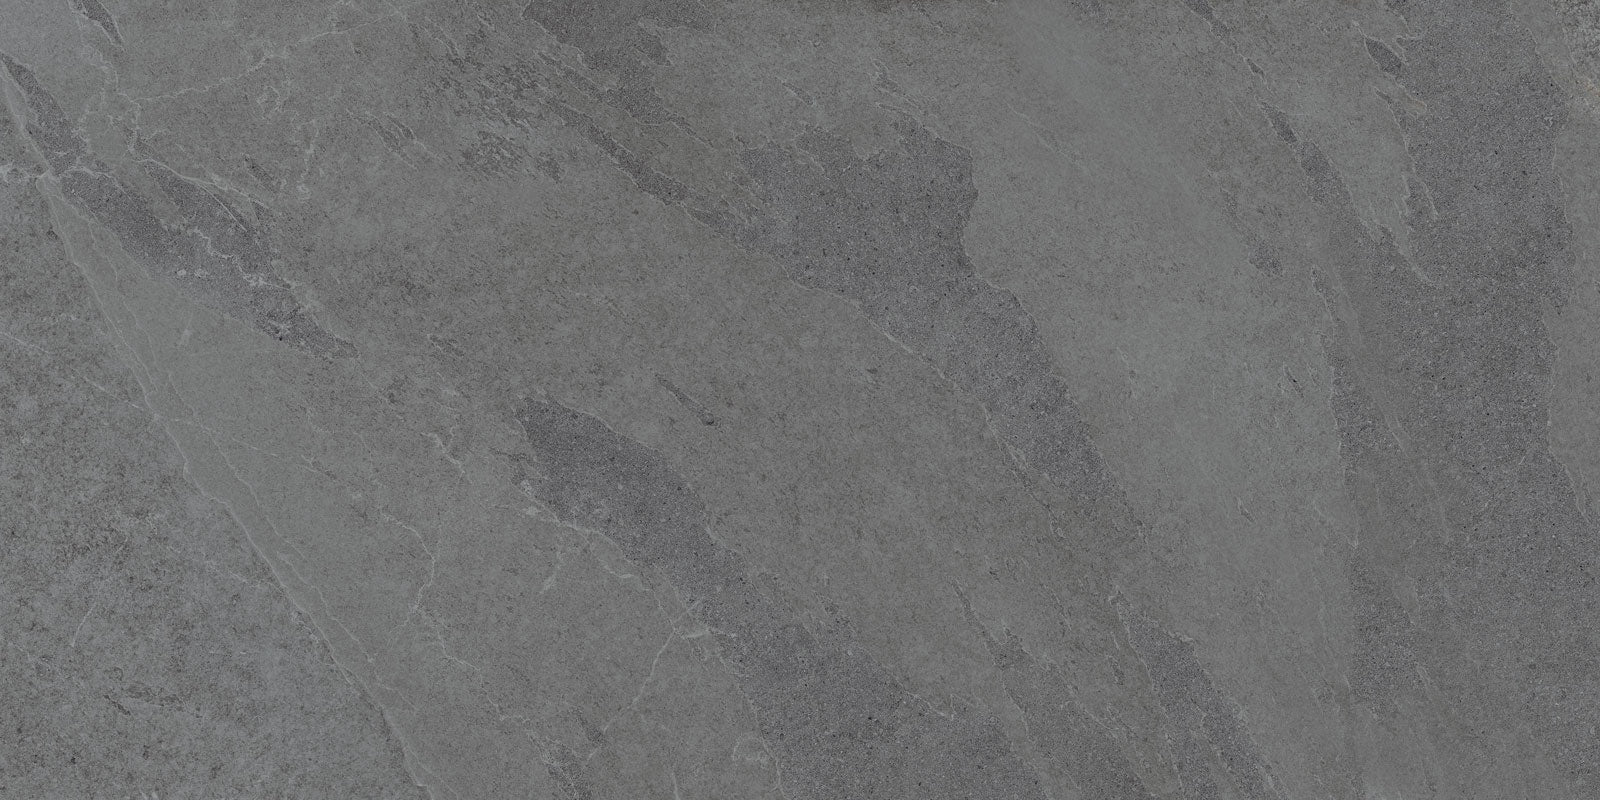 Angers Dark 600x1200mm Grip Floor Tile (1.44m2 per box)